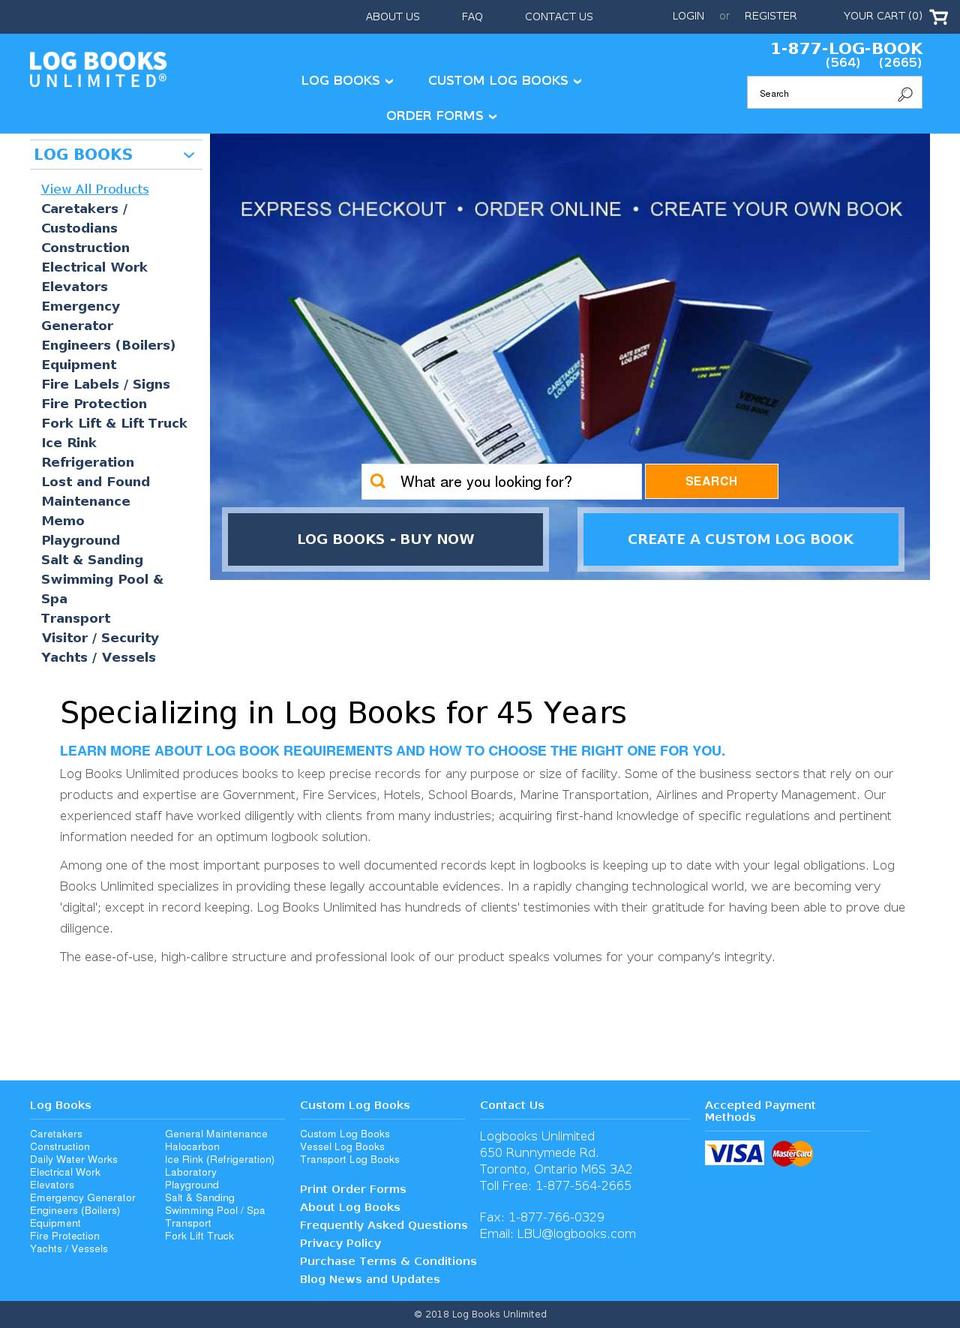 logbooks.ca shopify website screenshot